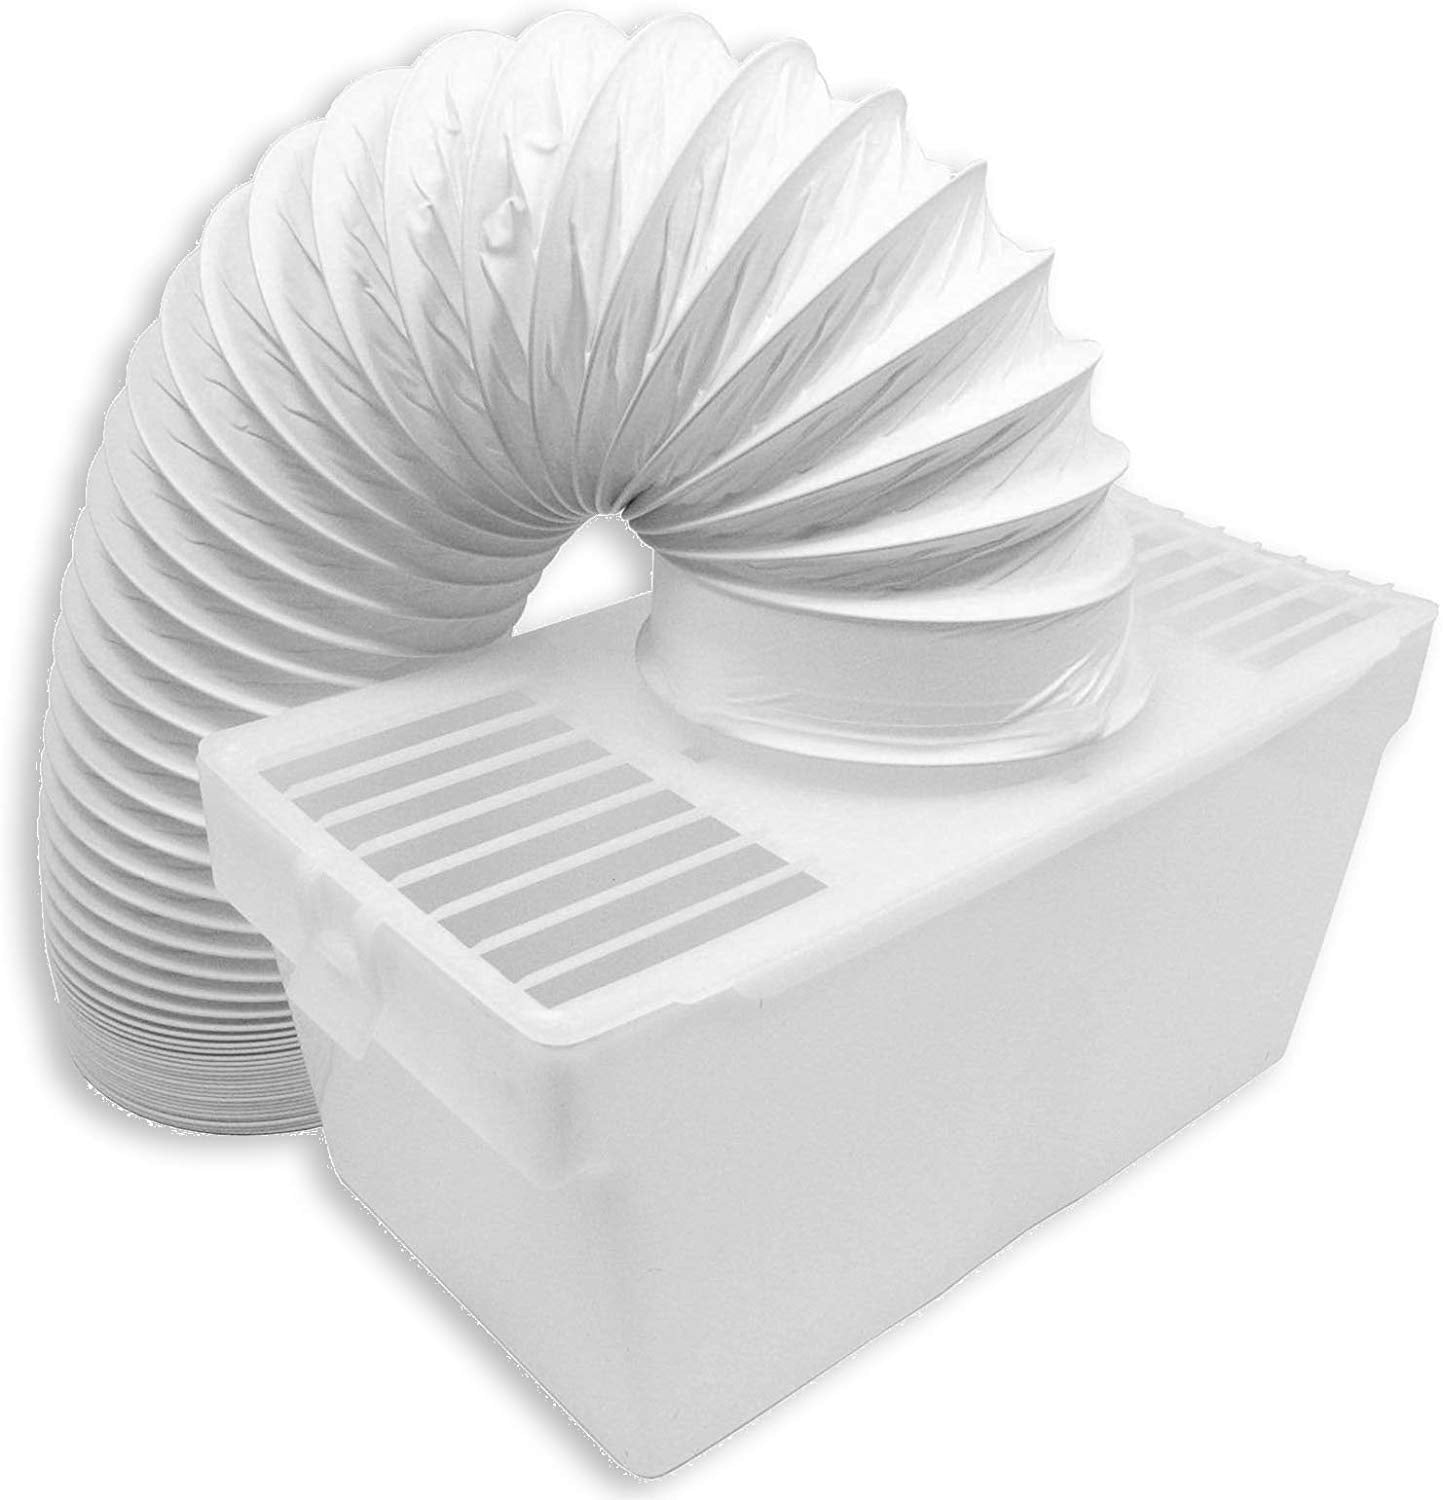 Condenser Vent Box & Hose Kit for Bosch Vented Tumble Dryers (1.5m / 4" Diameter)